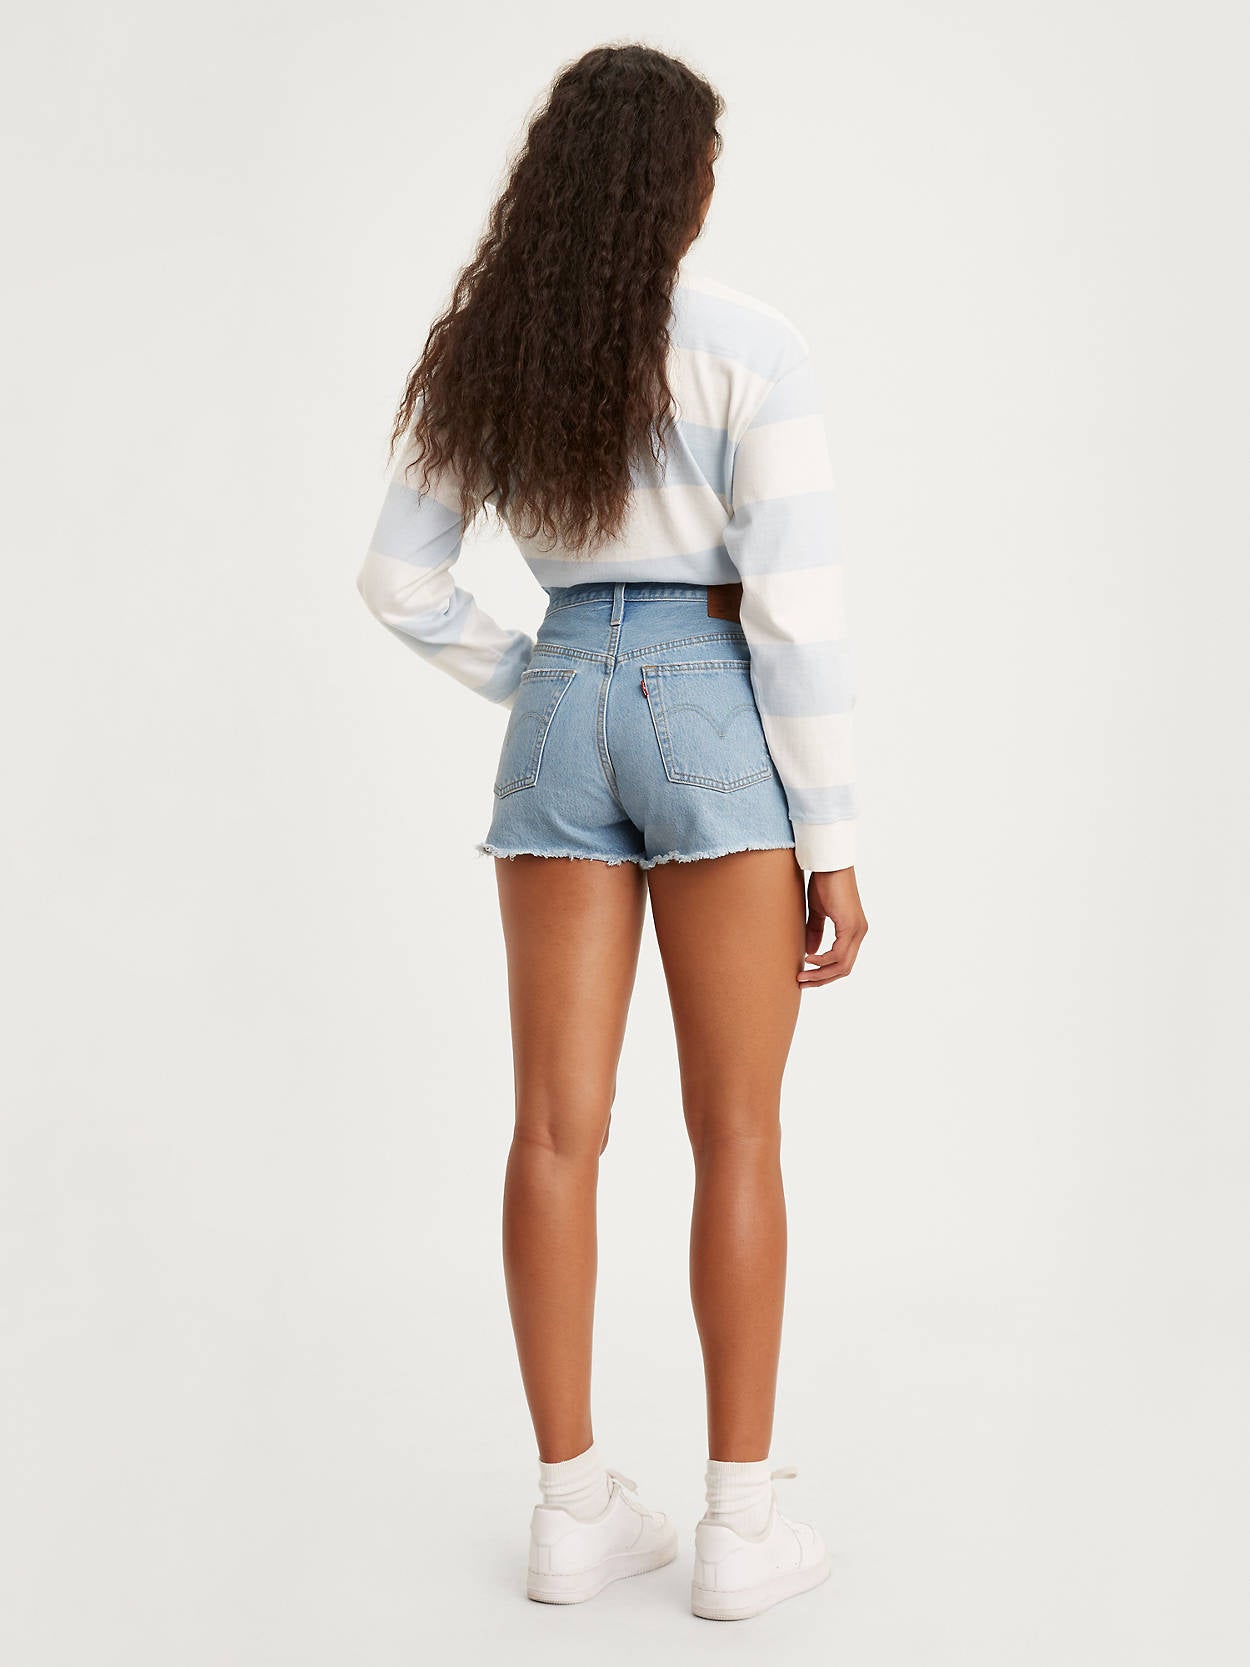 Women's Jean Shorts & Denim Shorts | Hollister Co.